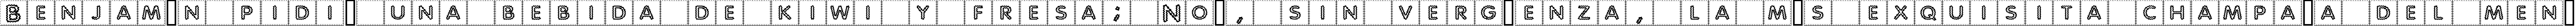 Пример написания шрифтом Quilted Indian текста на испанском